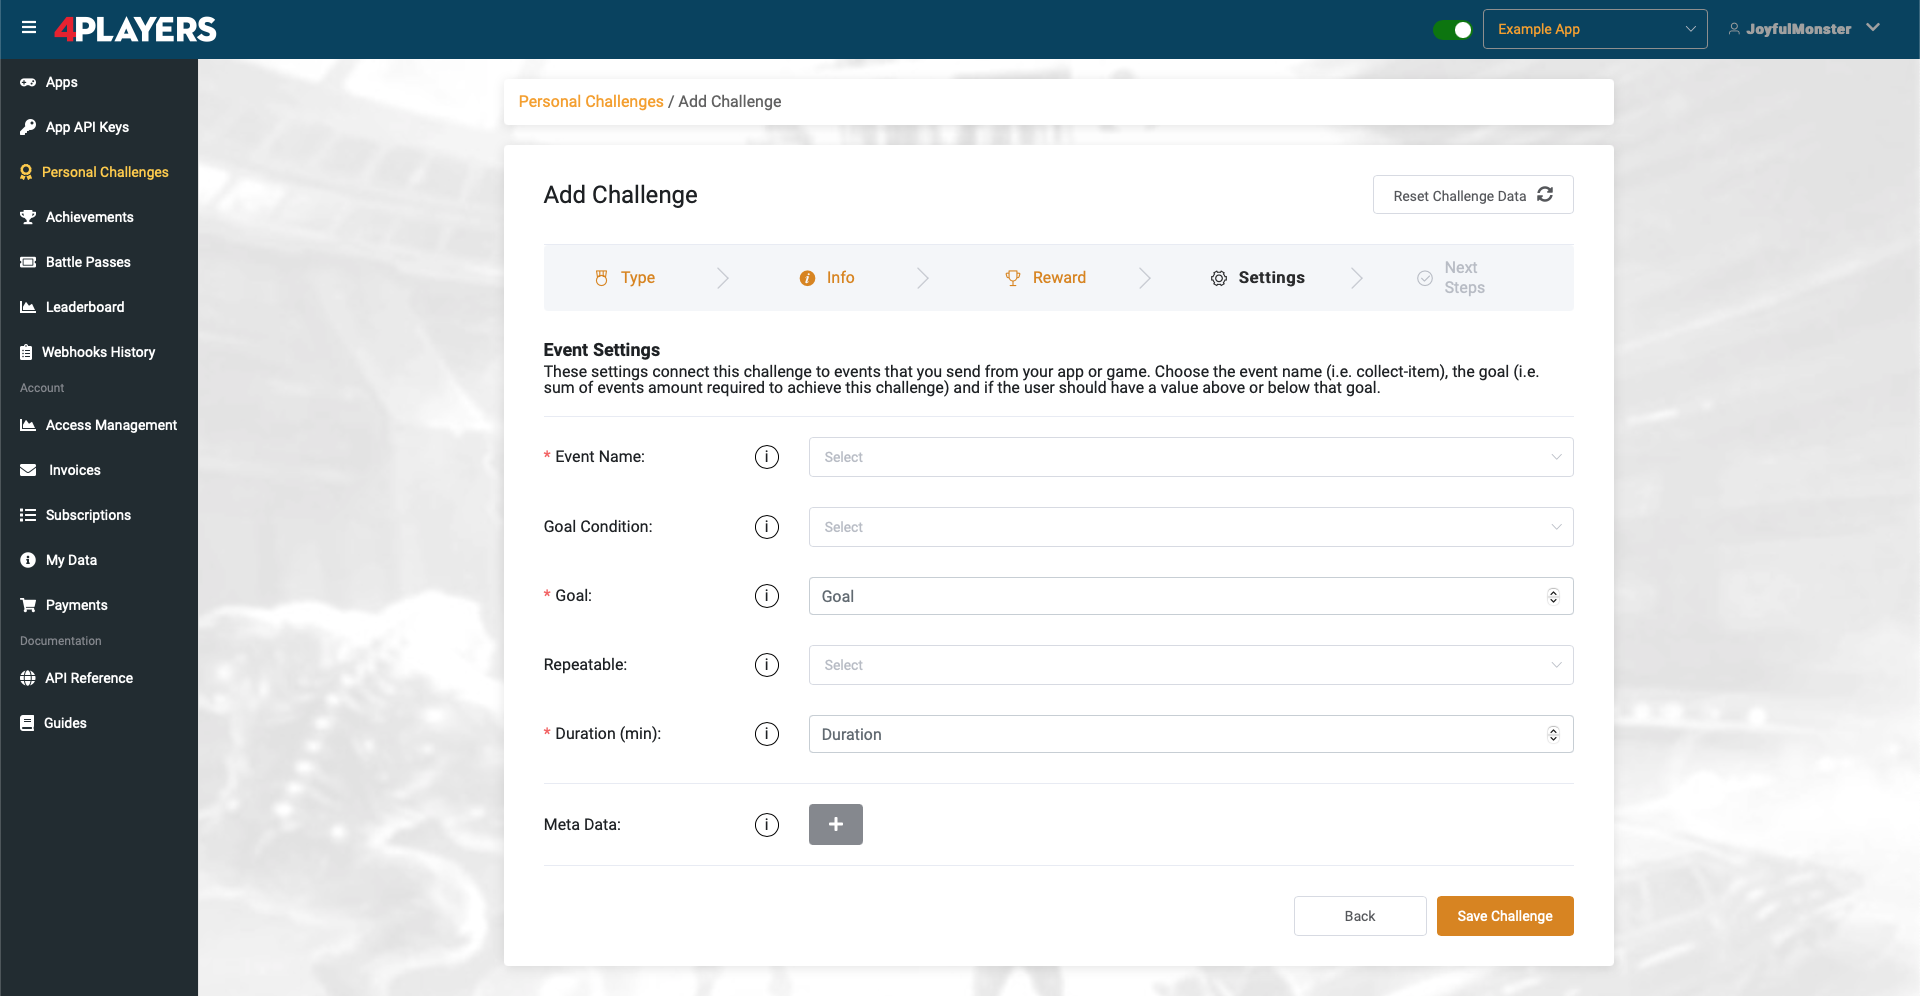 Step 4: Choosing challenge event settings